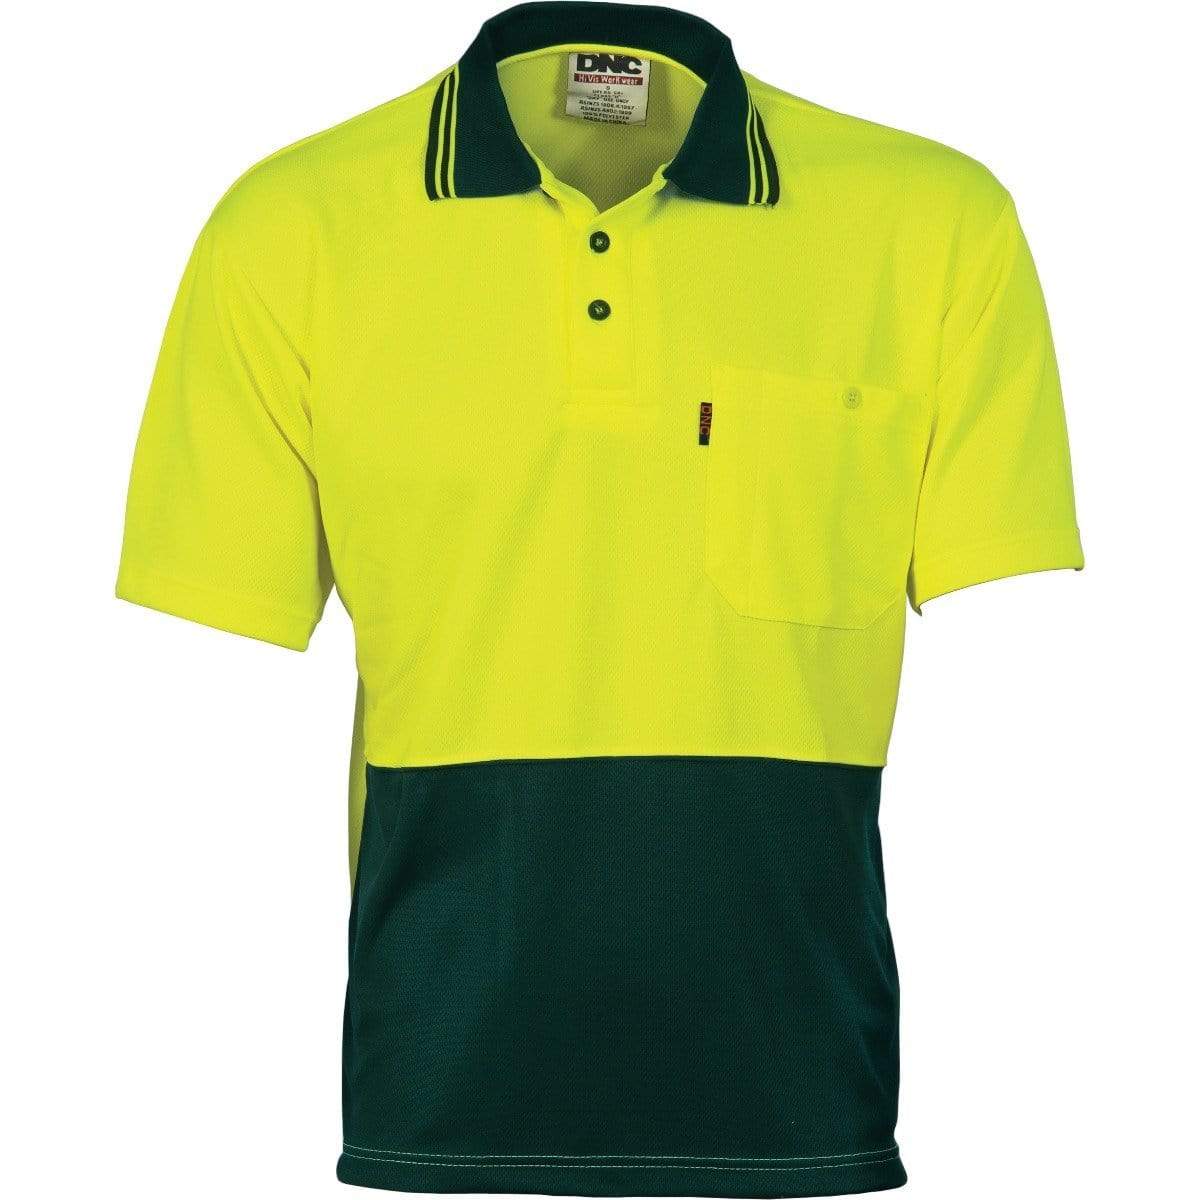 Dnc Workwear Hi-vis Two-tone Cool Breathe Short Sleeve Polo Shirt - 3811 Work Wear DNC Workwear Yellow/Bottle Green XS 